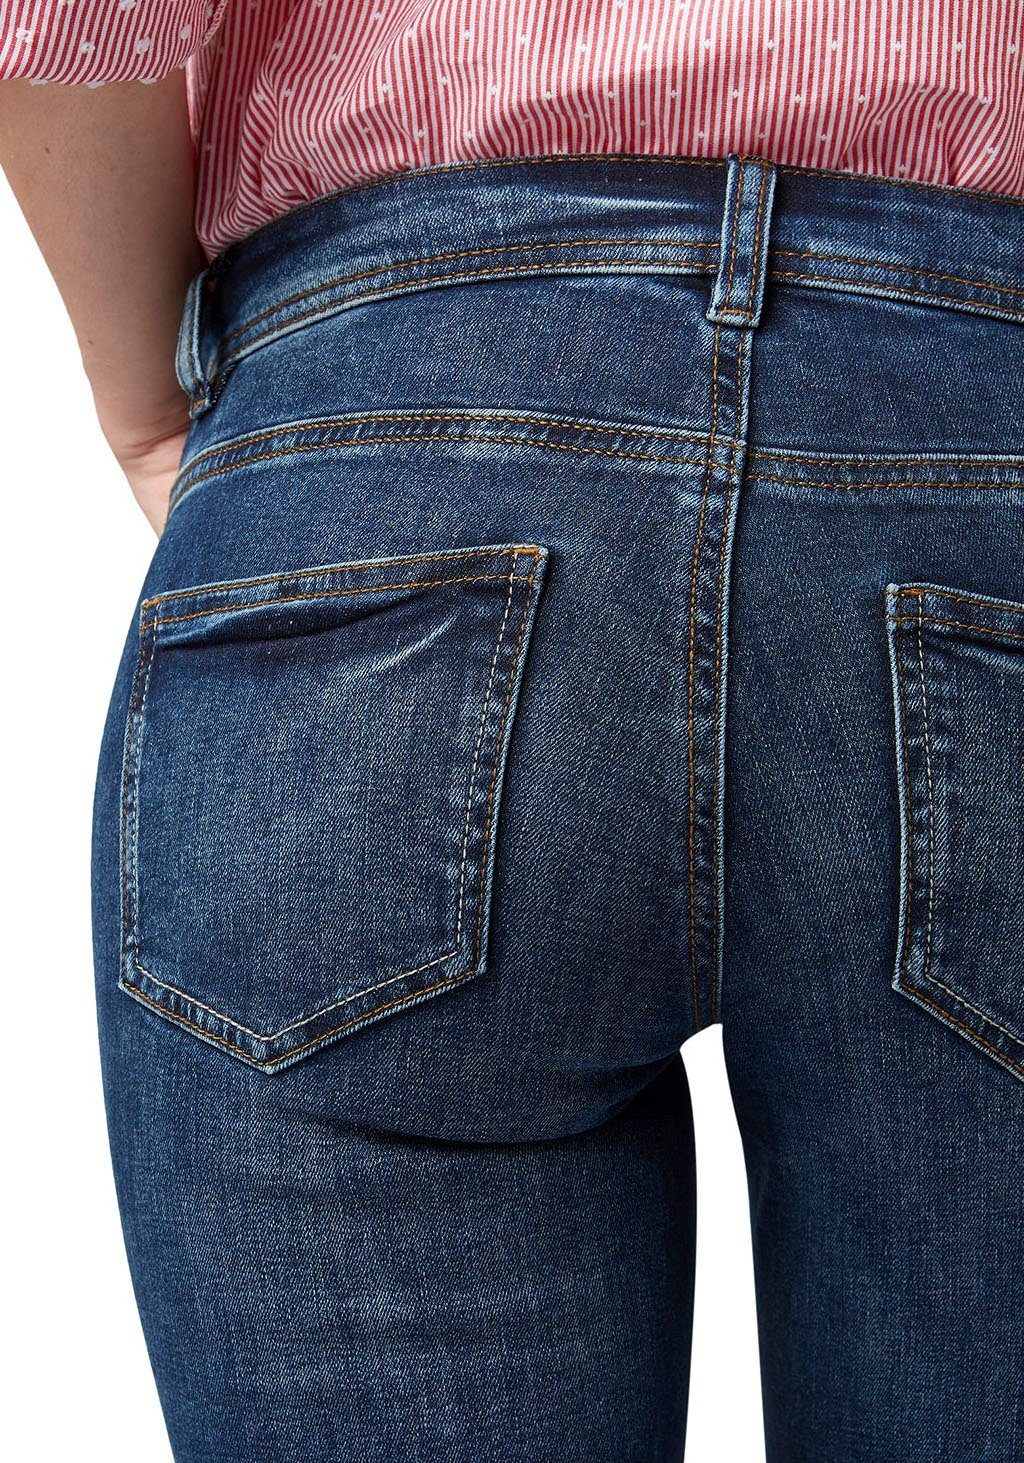 TOM TAILOR Straight-Jeans stone im Design washed klassischen mid